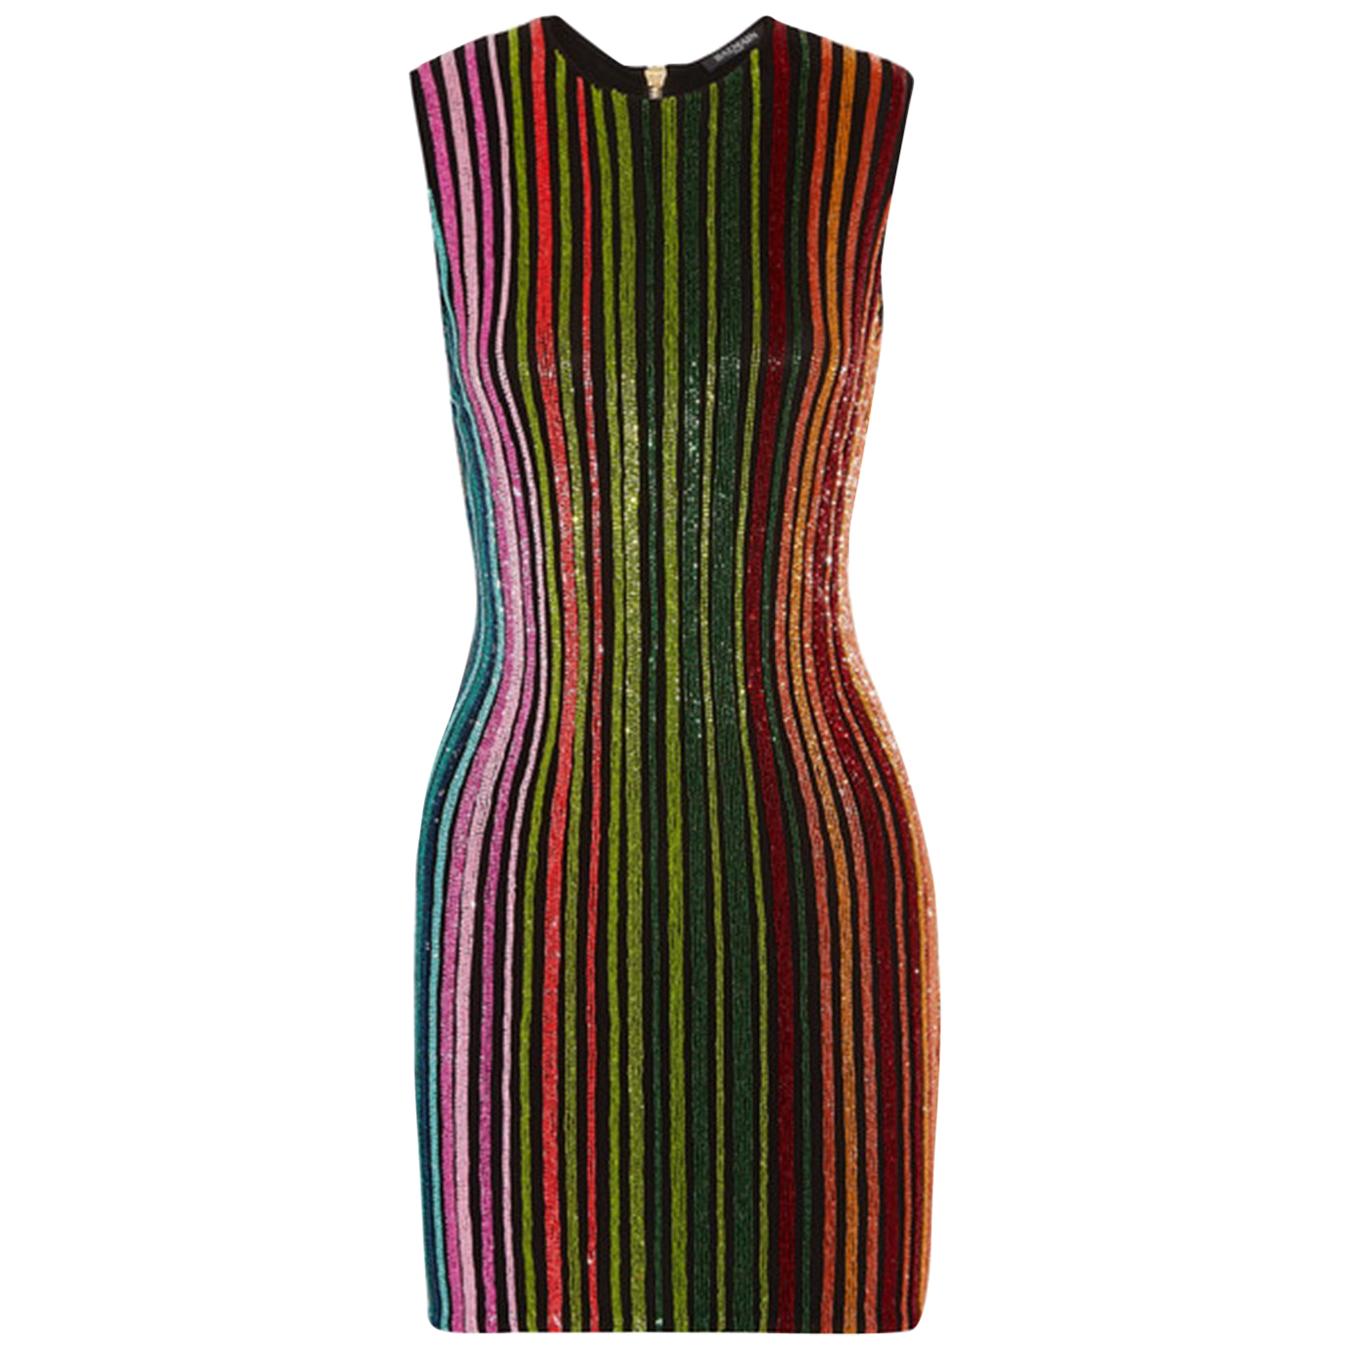 Balmain Beaded Dress - 13 For Sale on 1stDibs